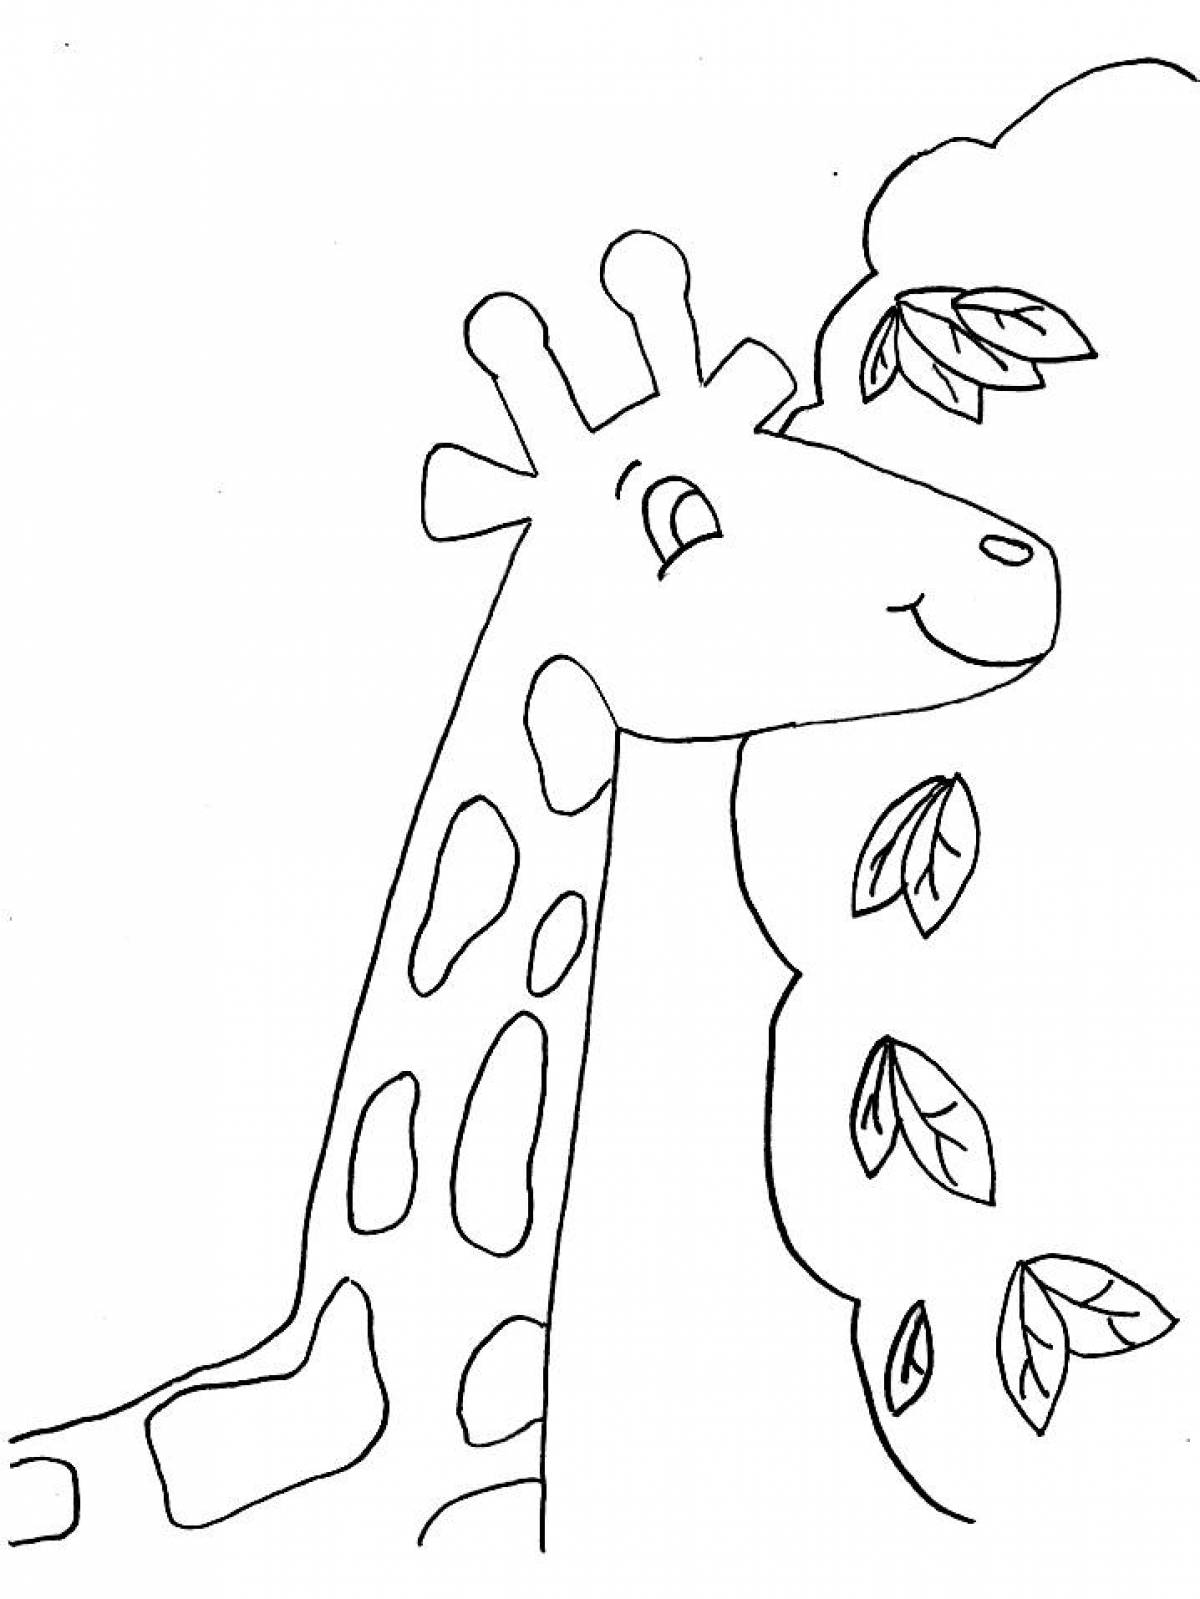 Joyful giraffe coloring book for kids